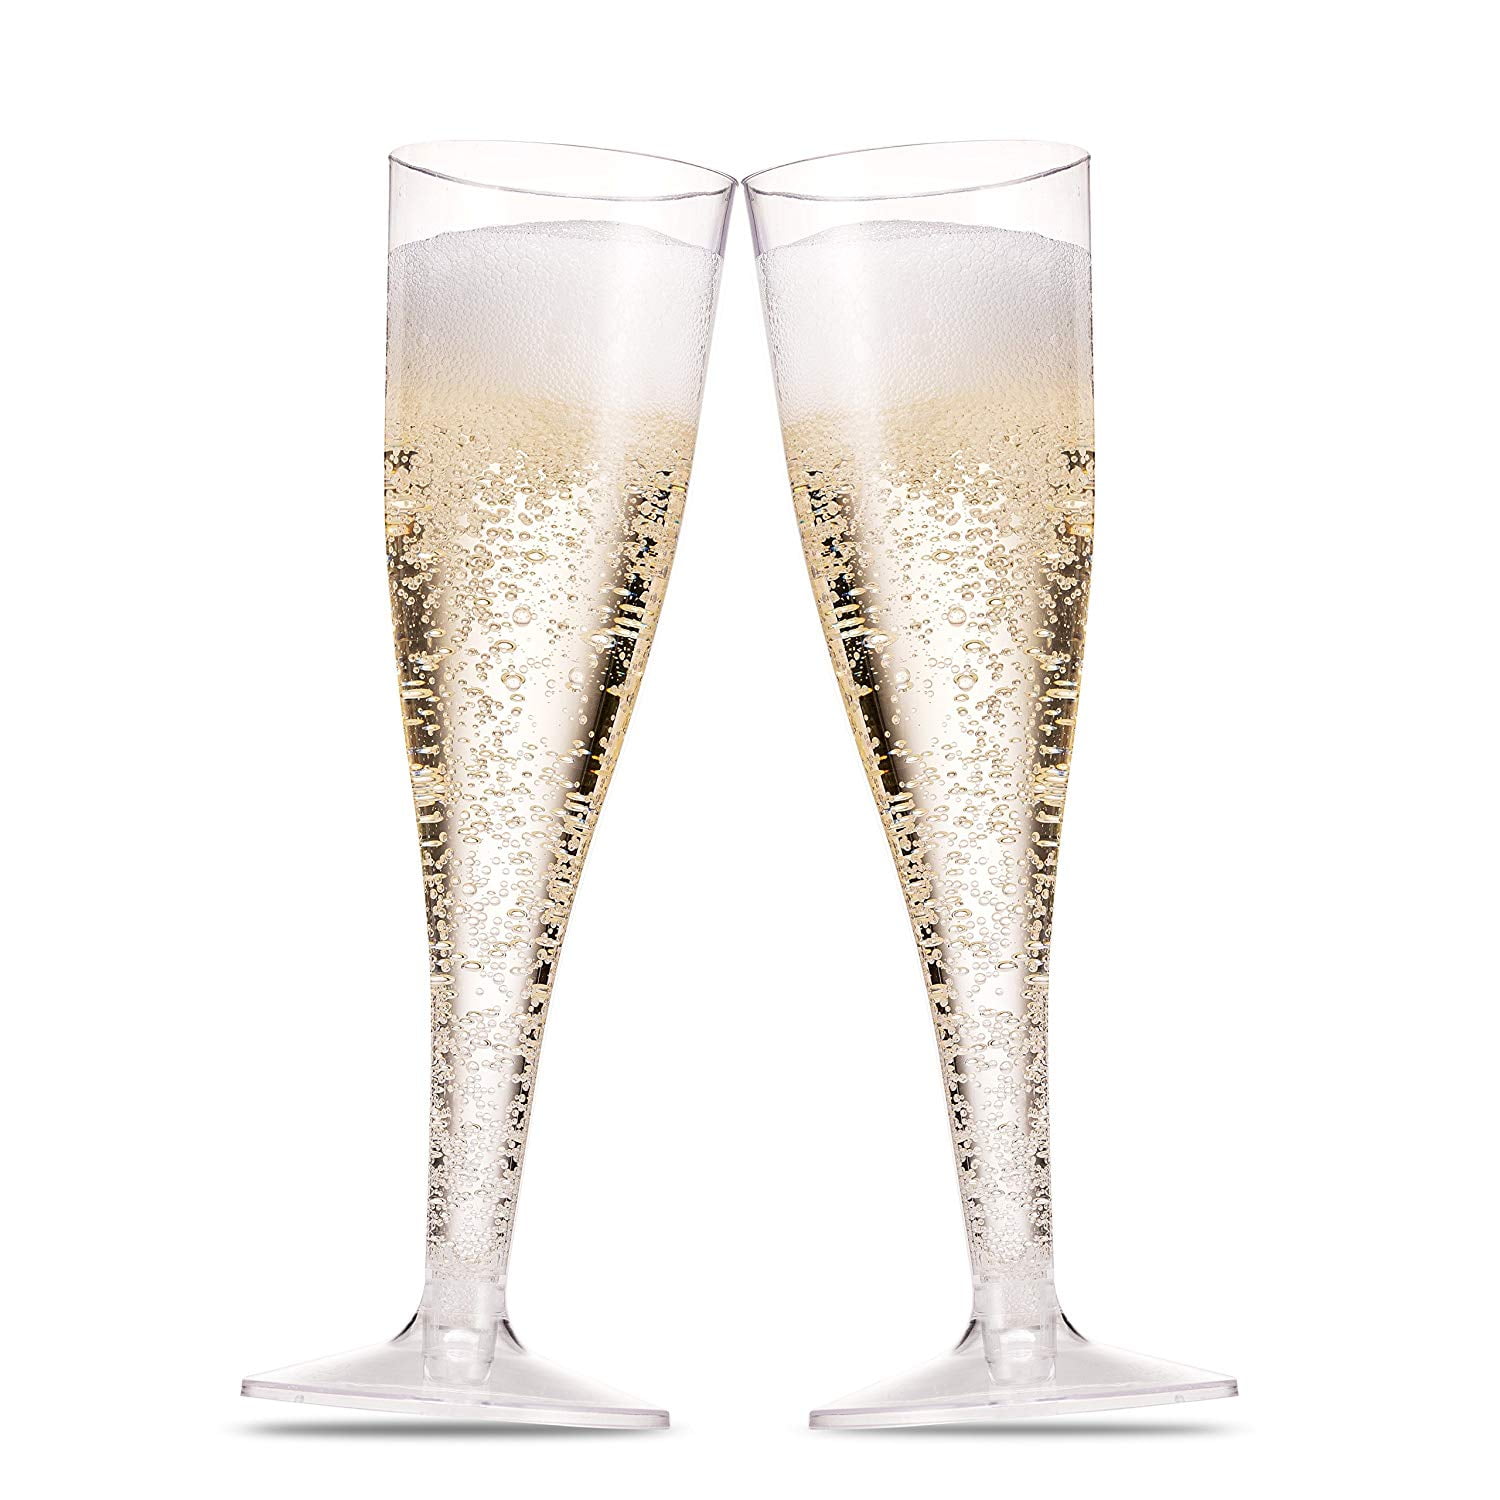 50 Plastic Champagne Flutes 5 Oz Clear Plastic Toasting Glasses